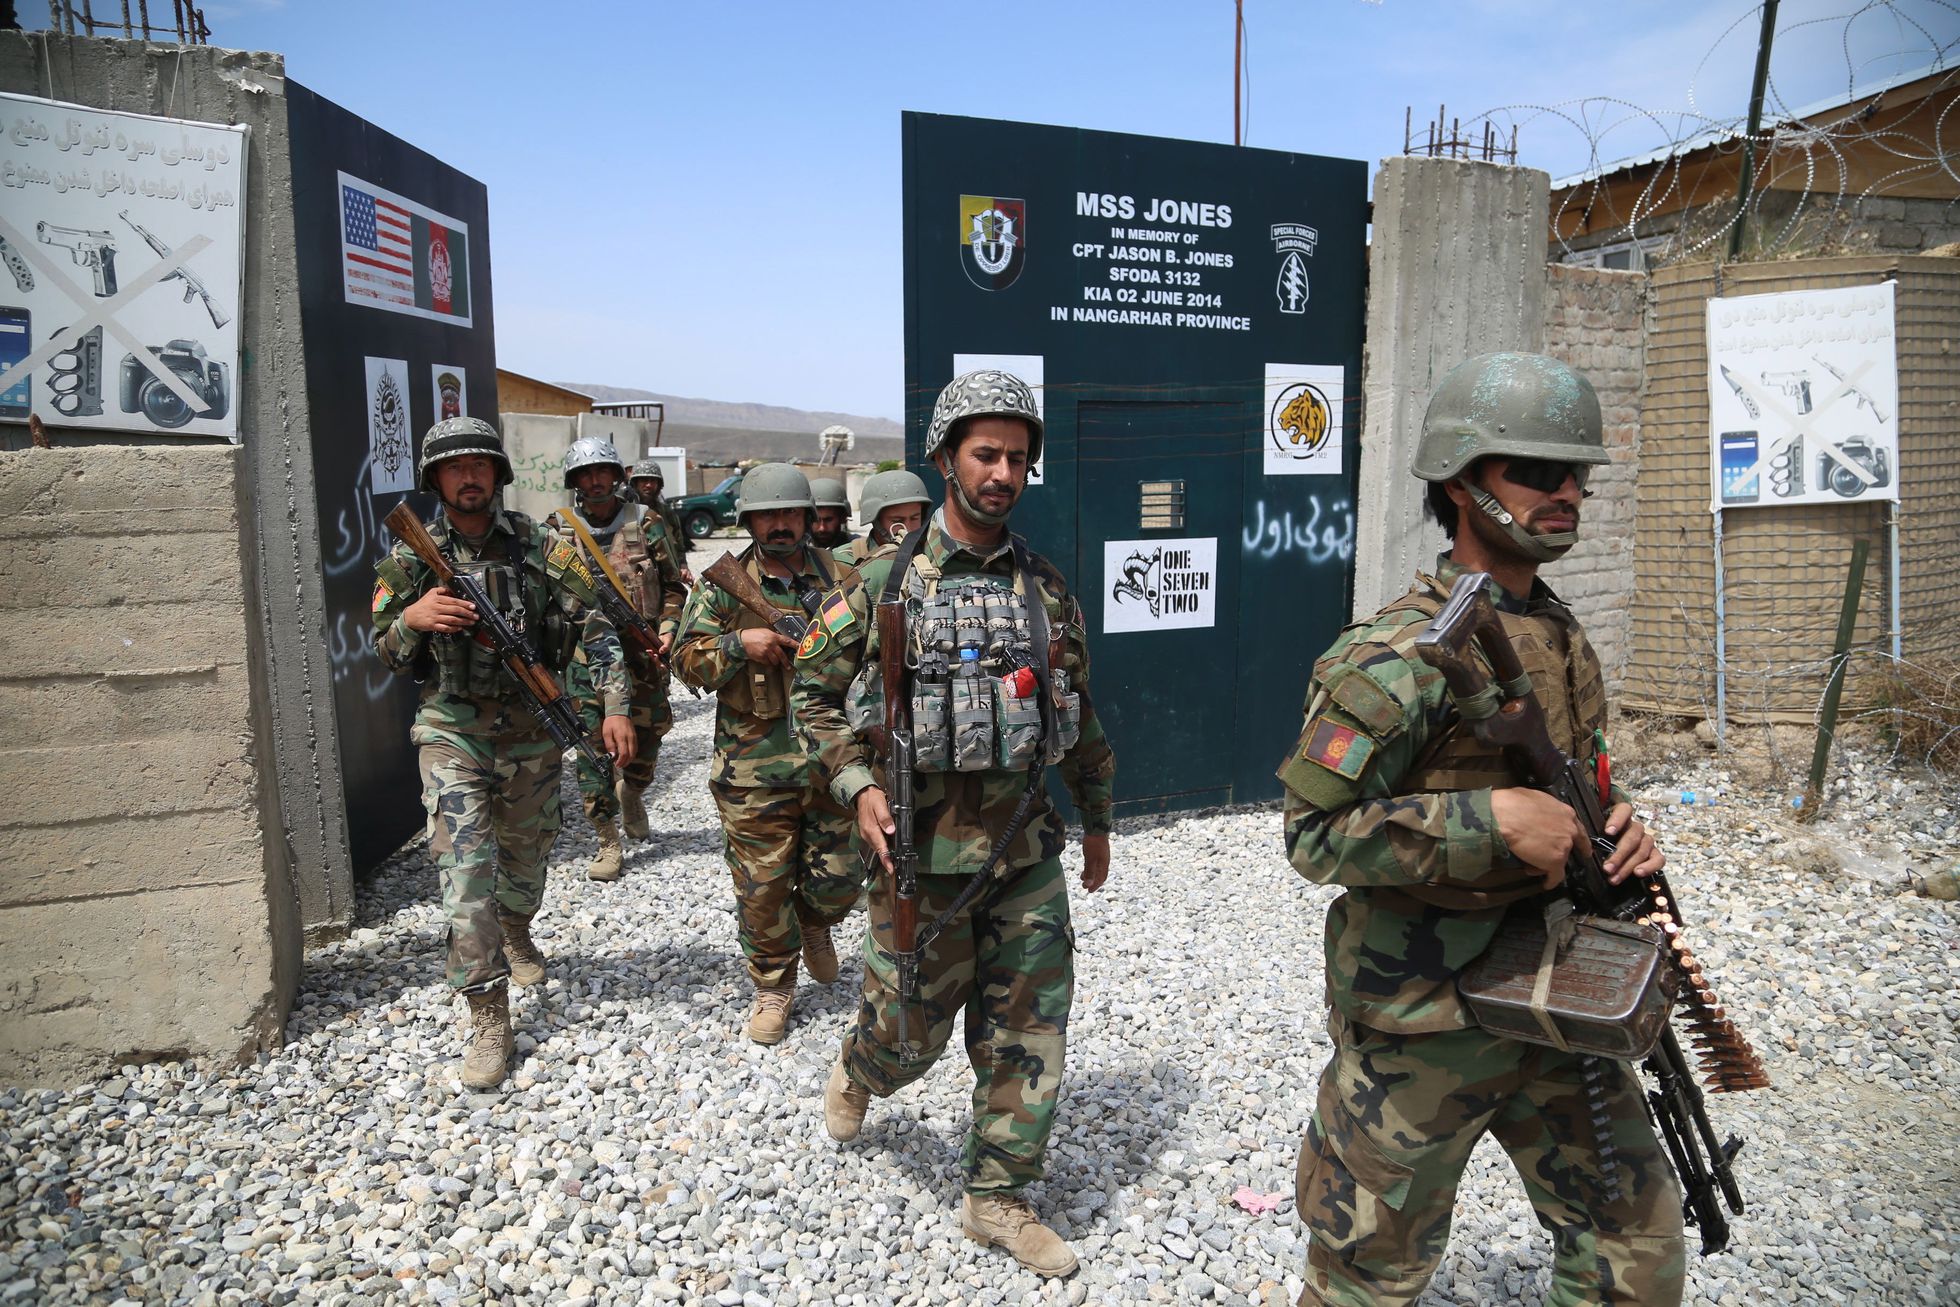 George W. Bush criticóla retirada de las tropas de Afganistán